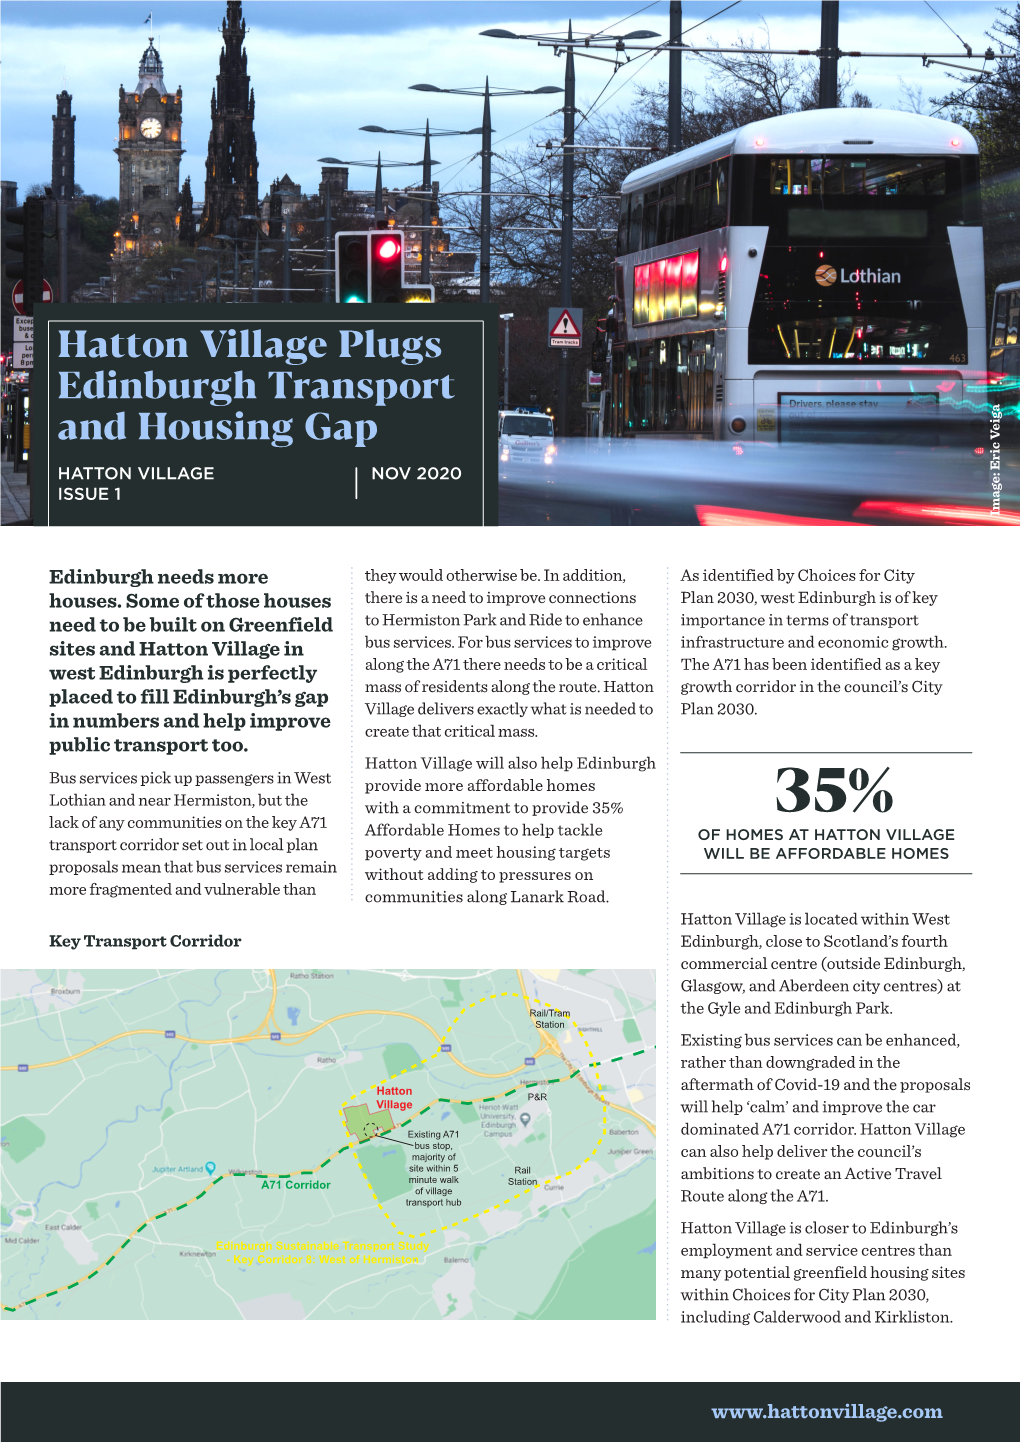 Hatton Village Plugs Edinburgh Transport and Housing Gap HATTON VILLAGE NOV 2020 ISSUE 1 Image: Eric Veiga Image